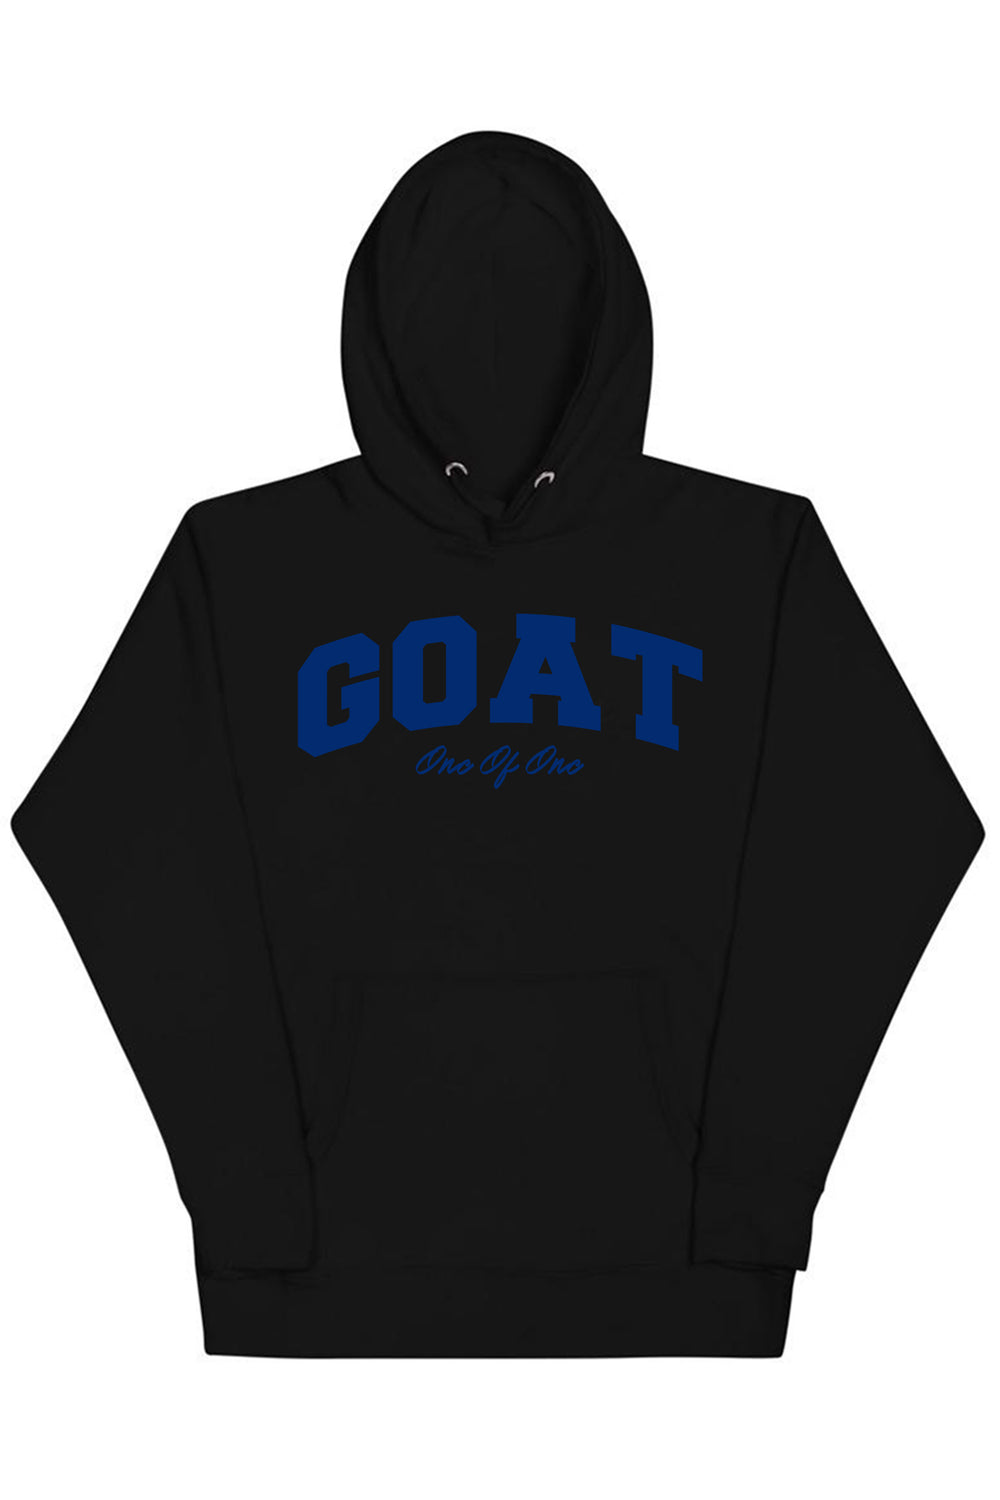 Goat Hoodie (Royal Blue Logo) - Zamage